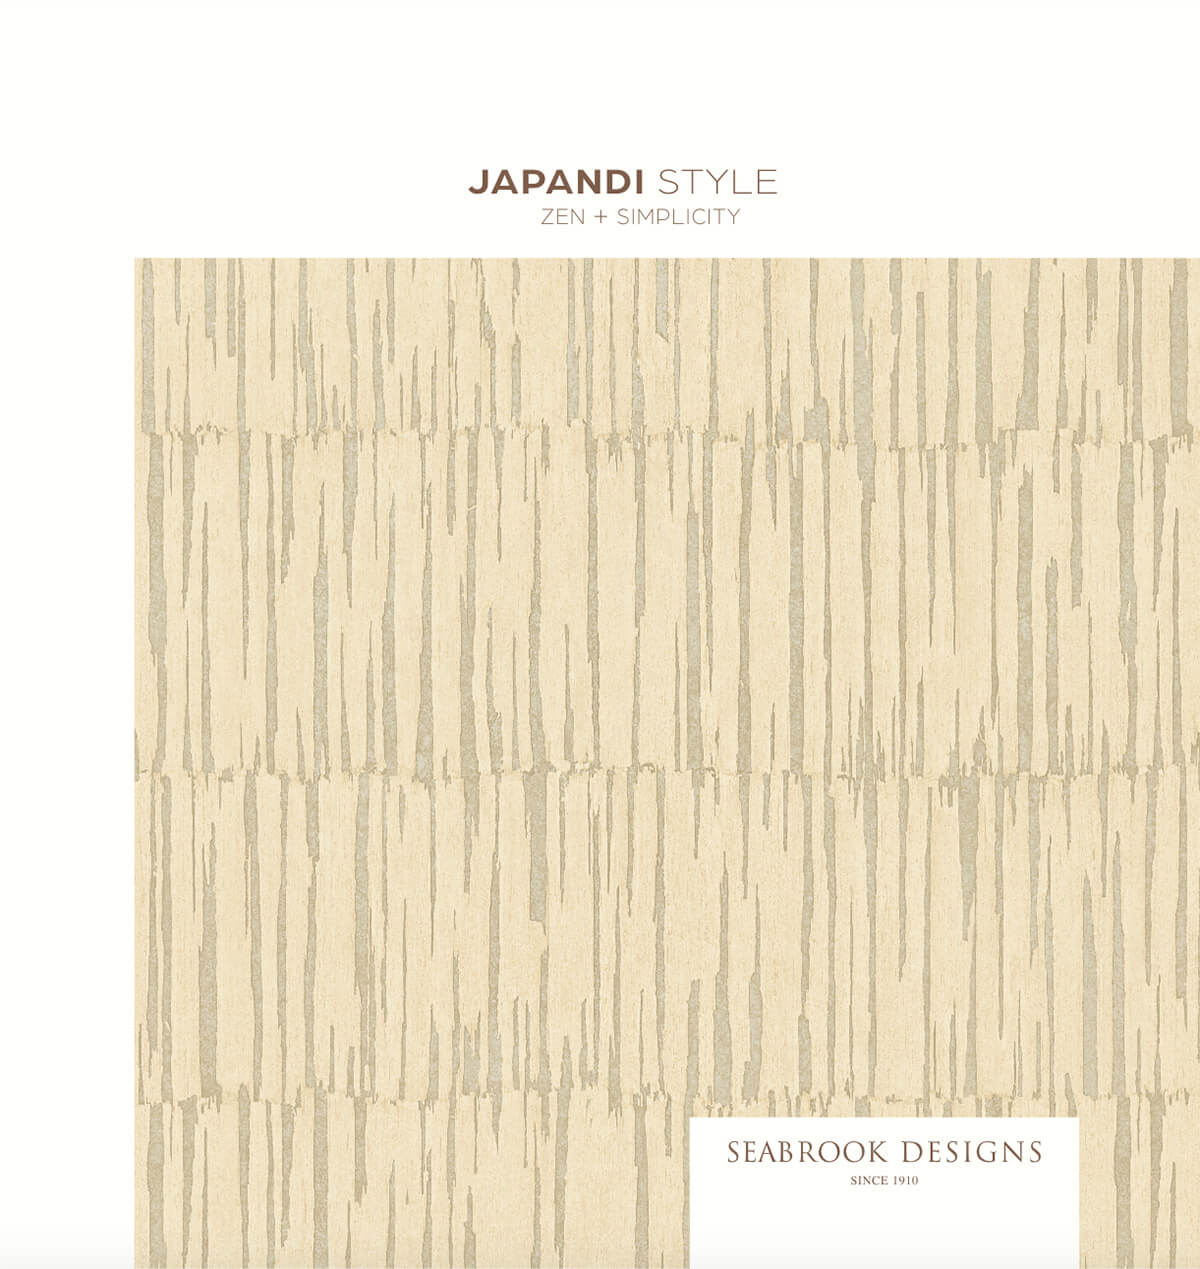 Seabrook Designs Japandi Style Hana Wallpaper - Stone & Metallic Champagne